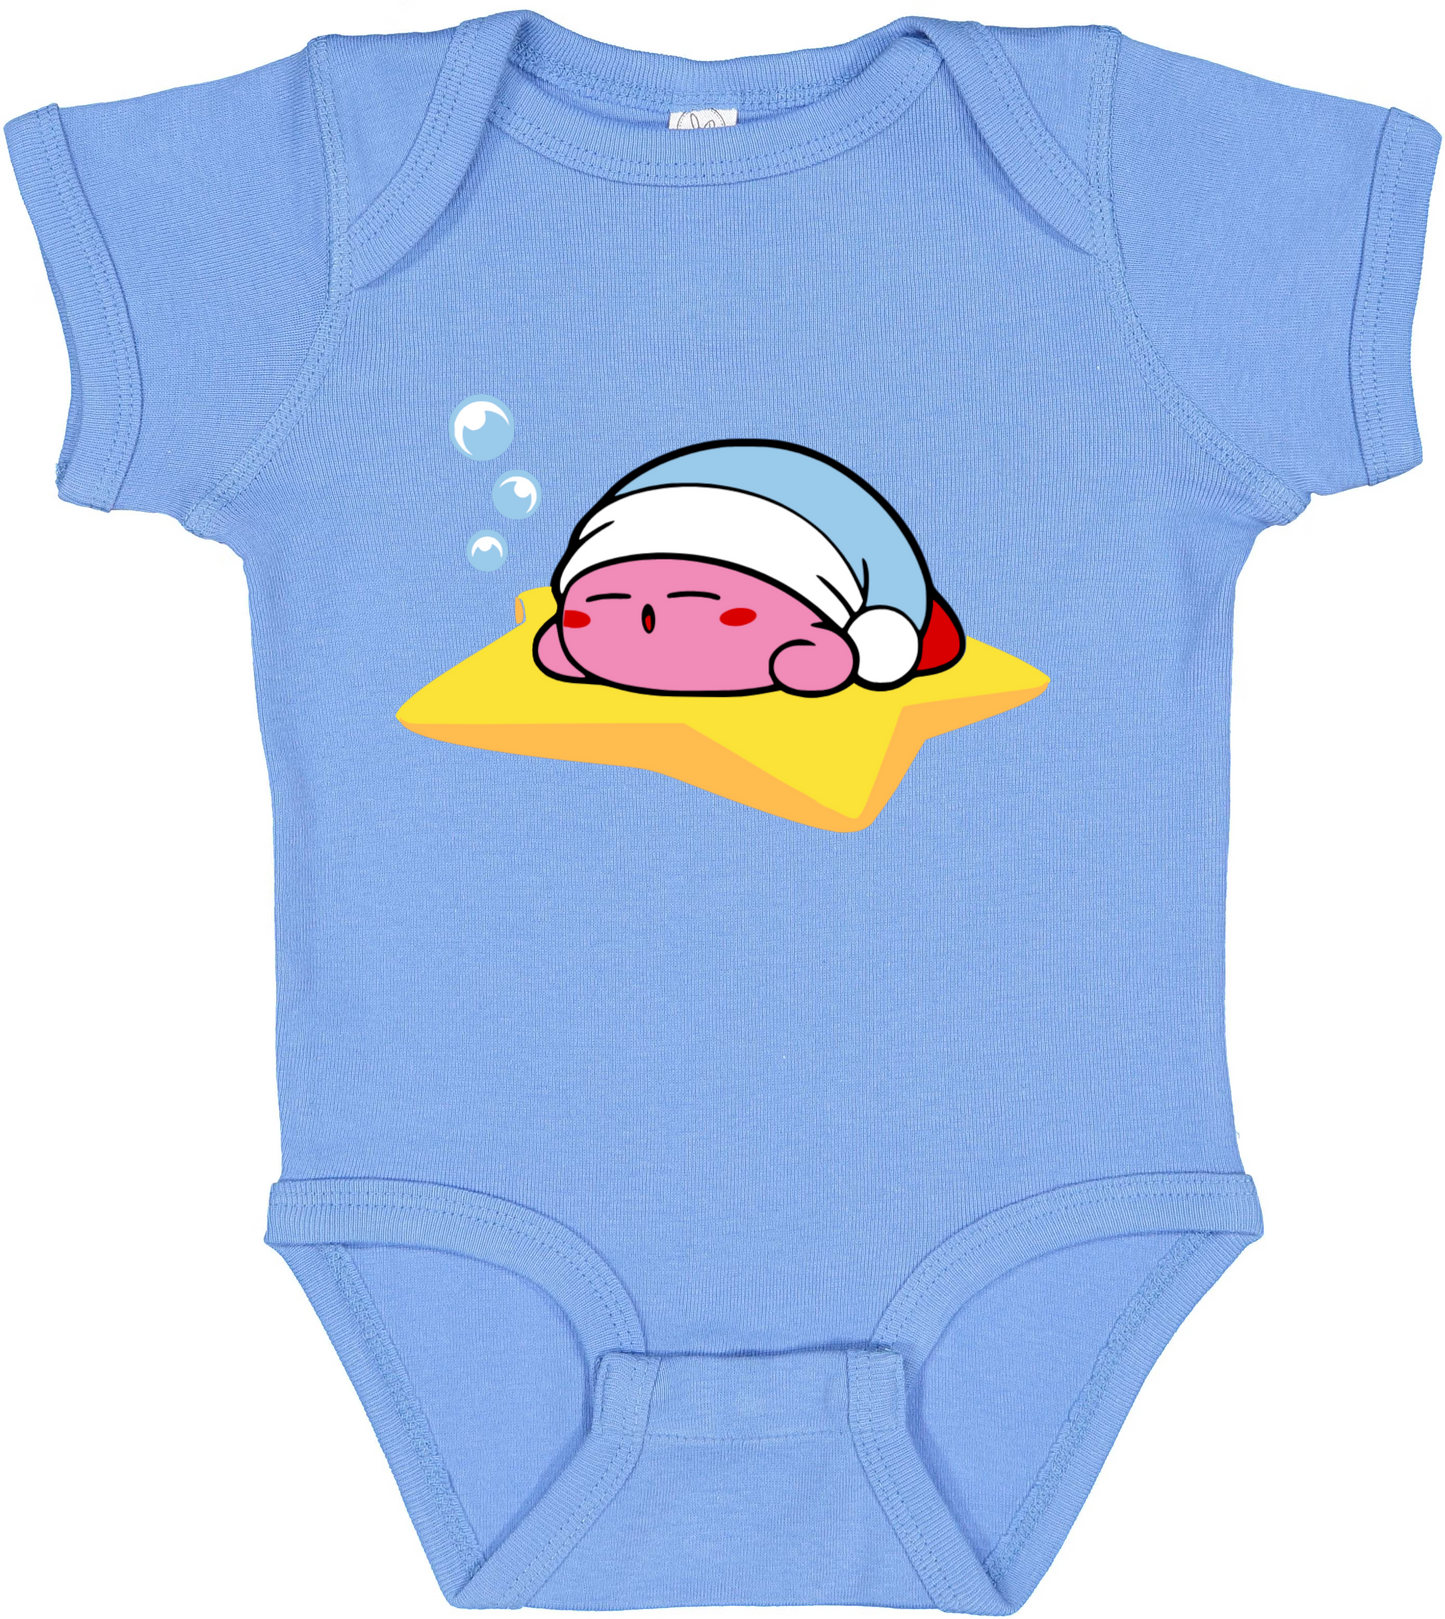 Sleeping "Baby Kirby" Baby Onesie Bodysuit